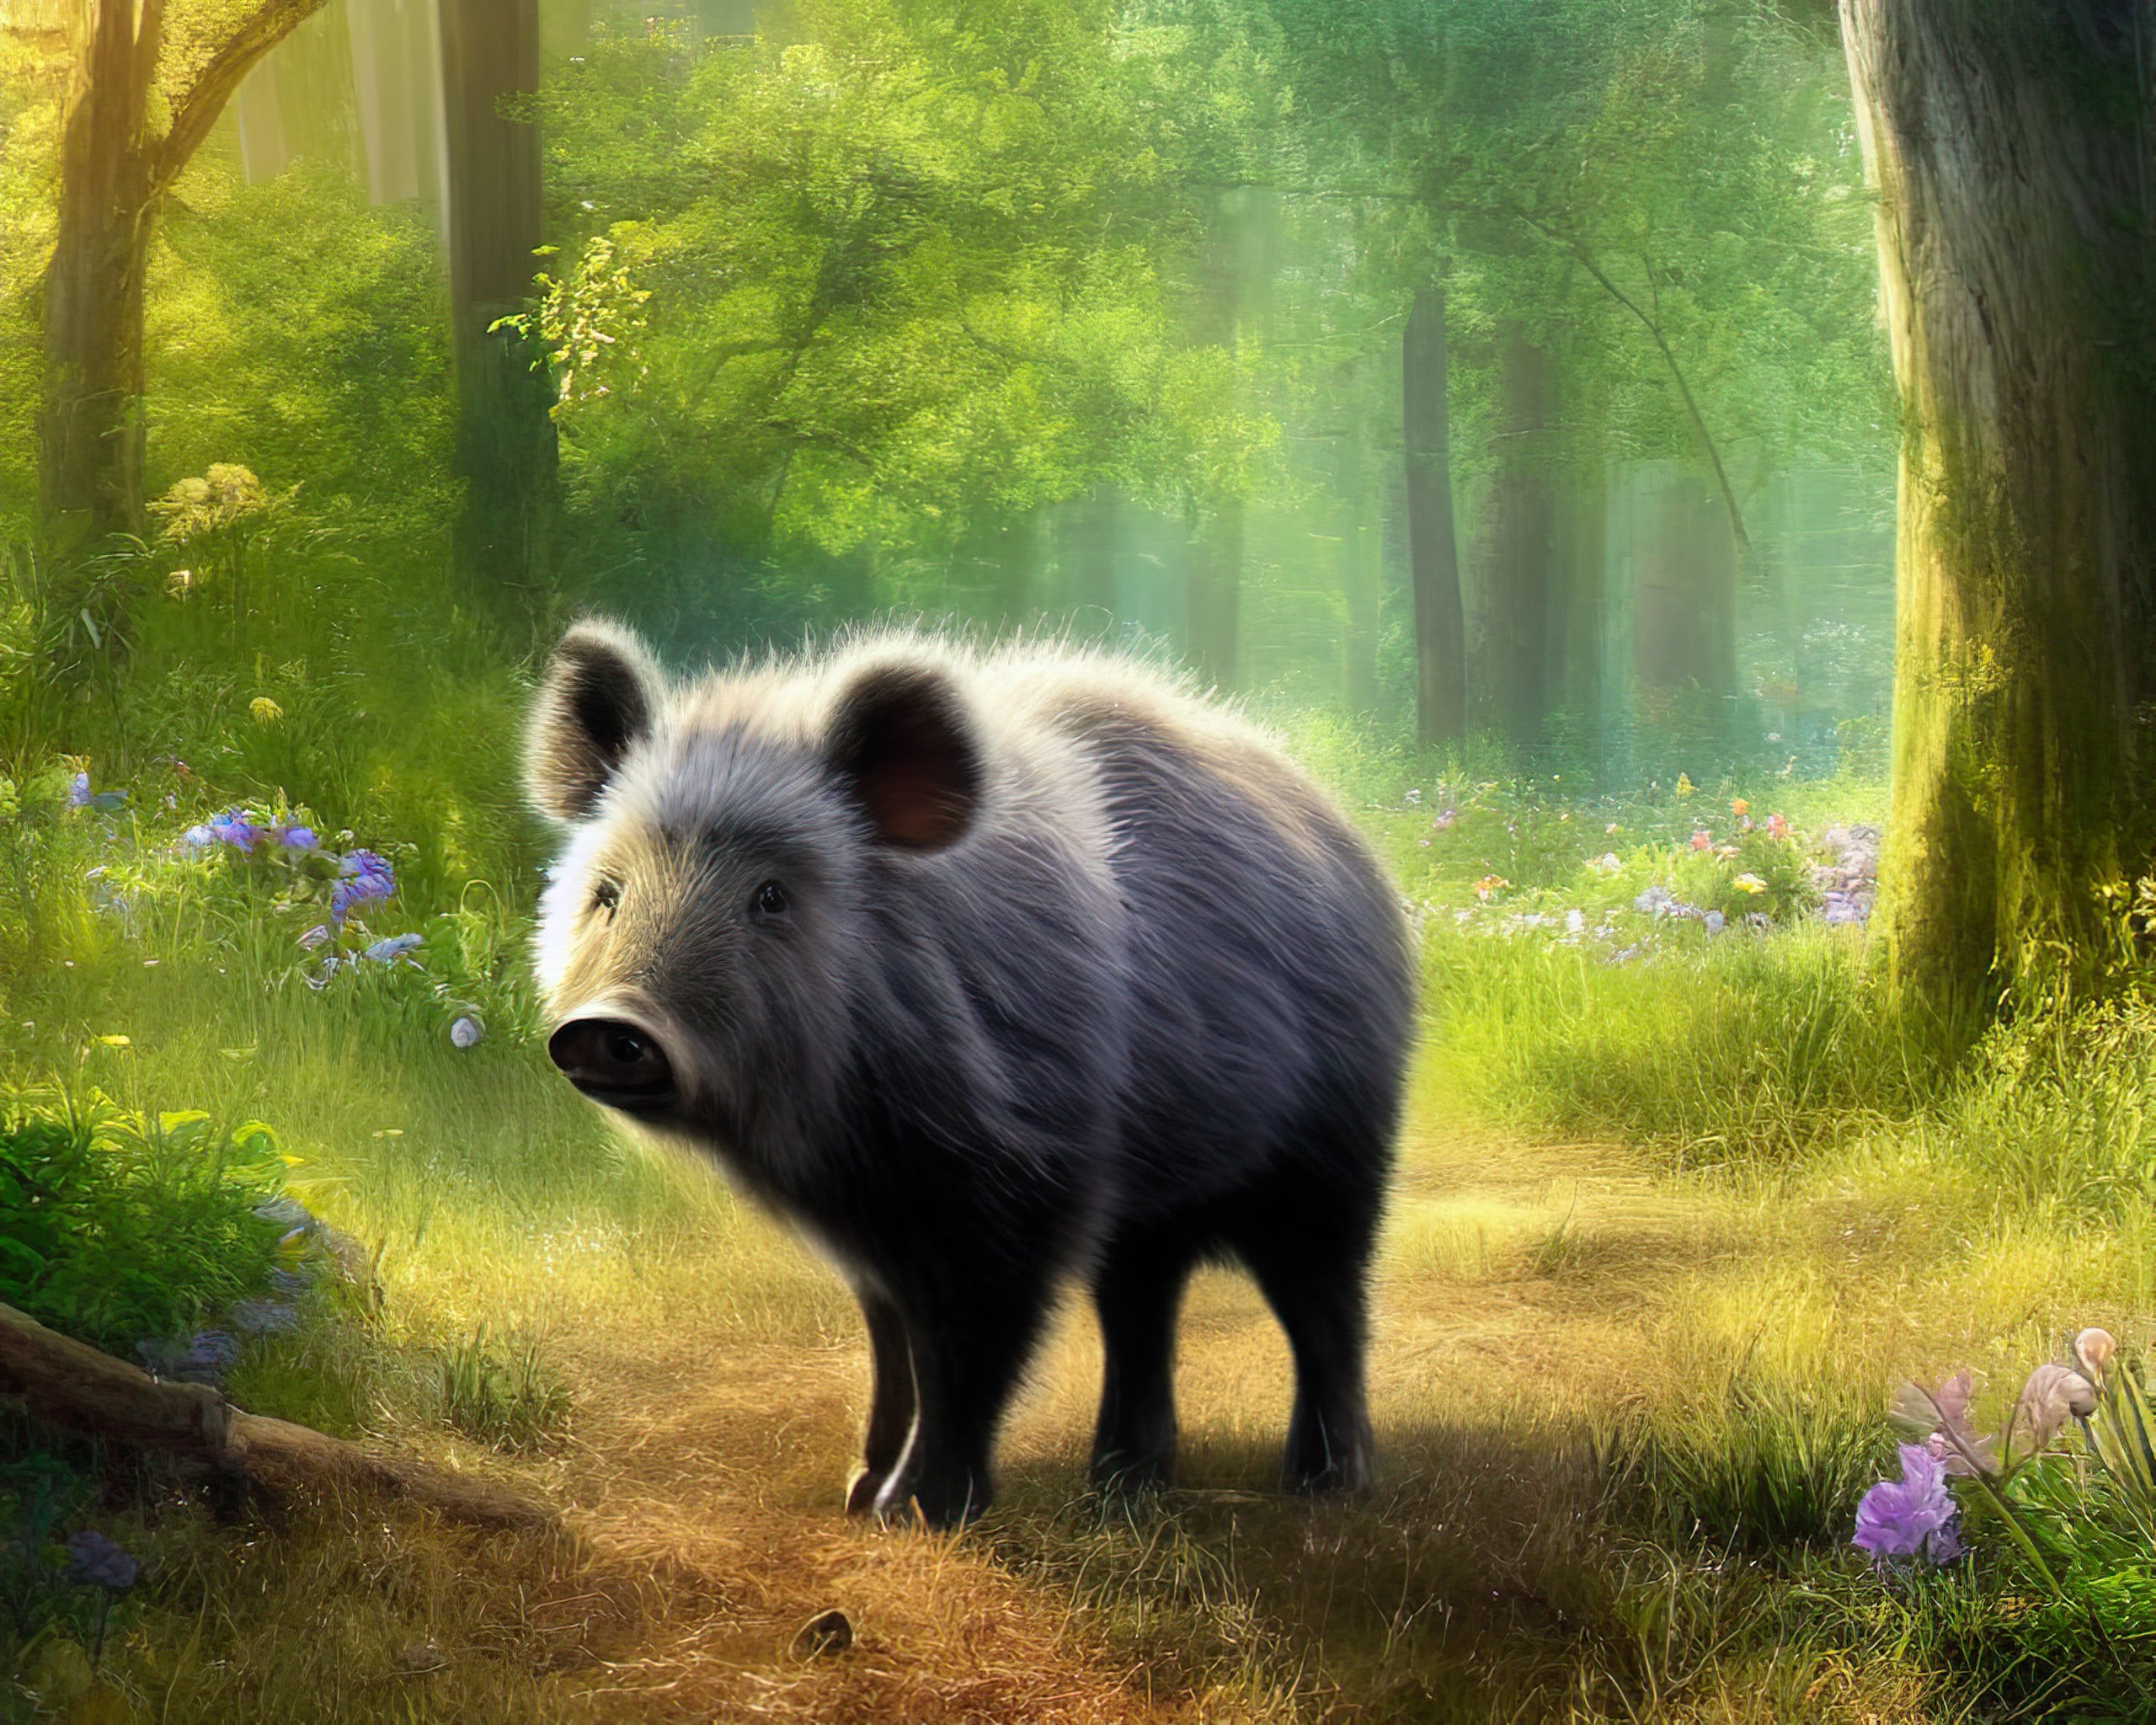 Boar in an Idyllic Forest